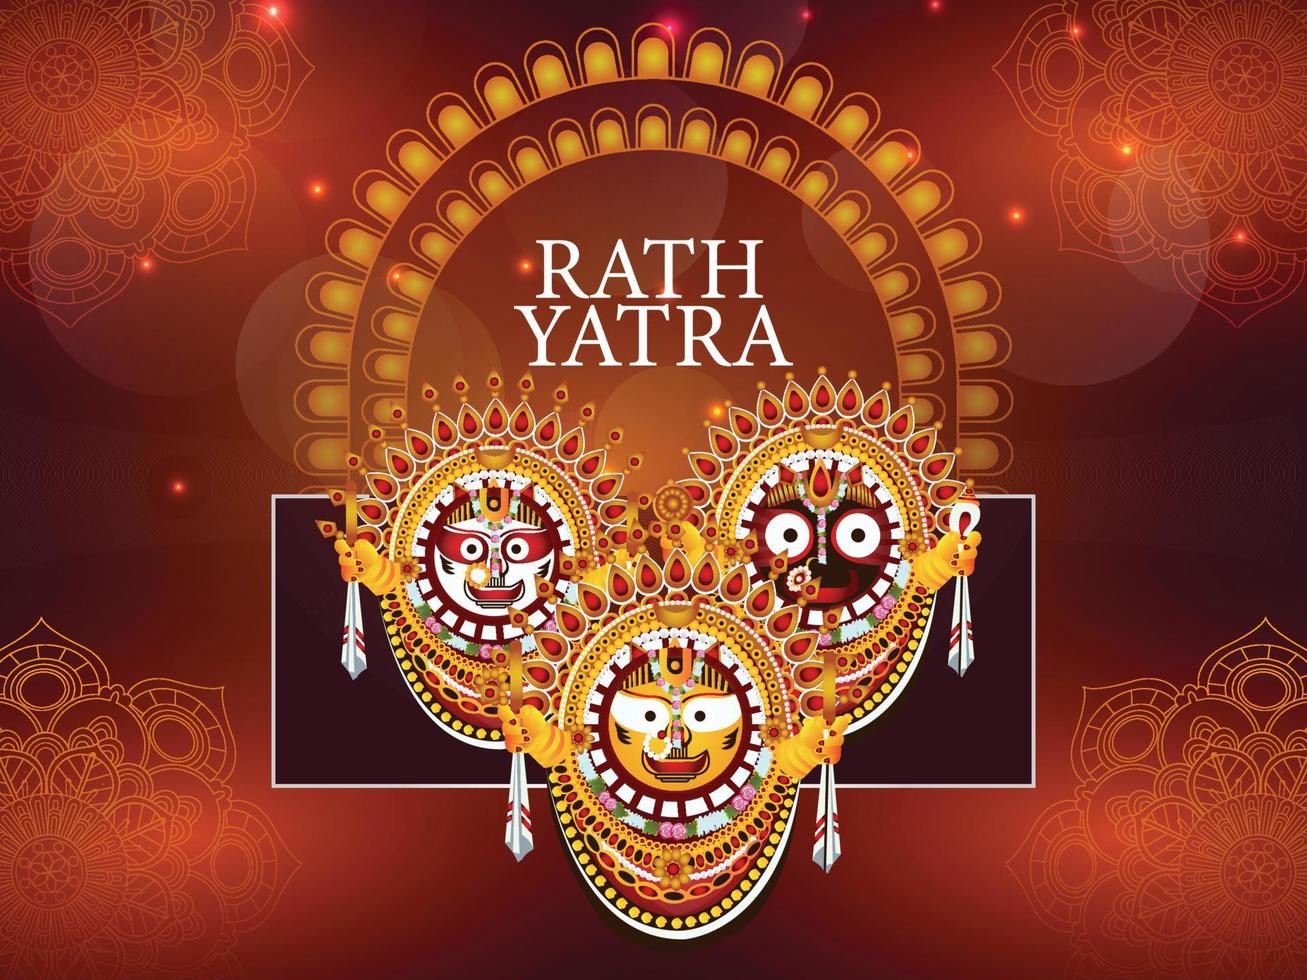 Happy rath yatra celebration for lord jagannath balabhadra and subhadra vector illustration